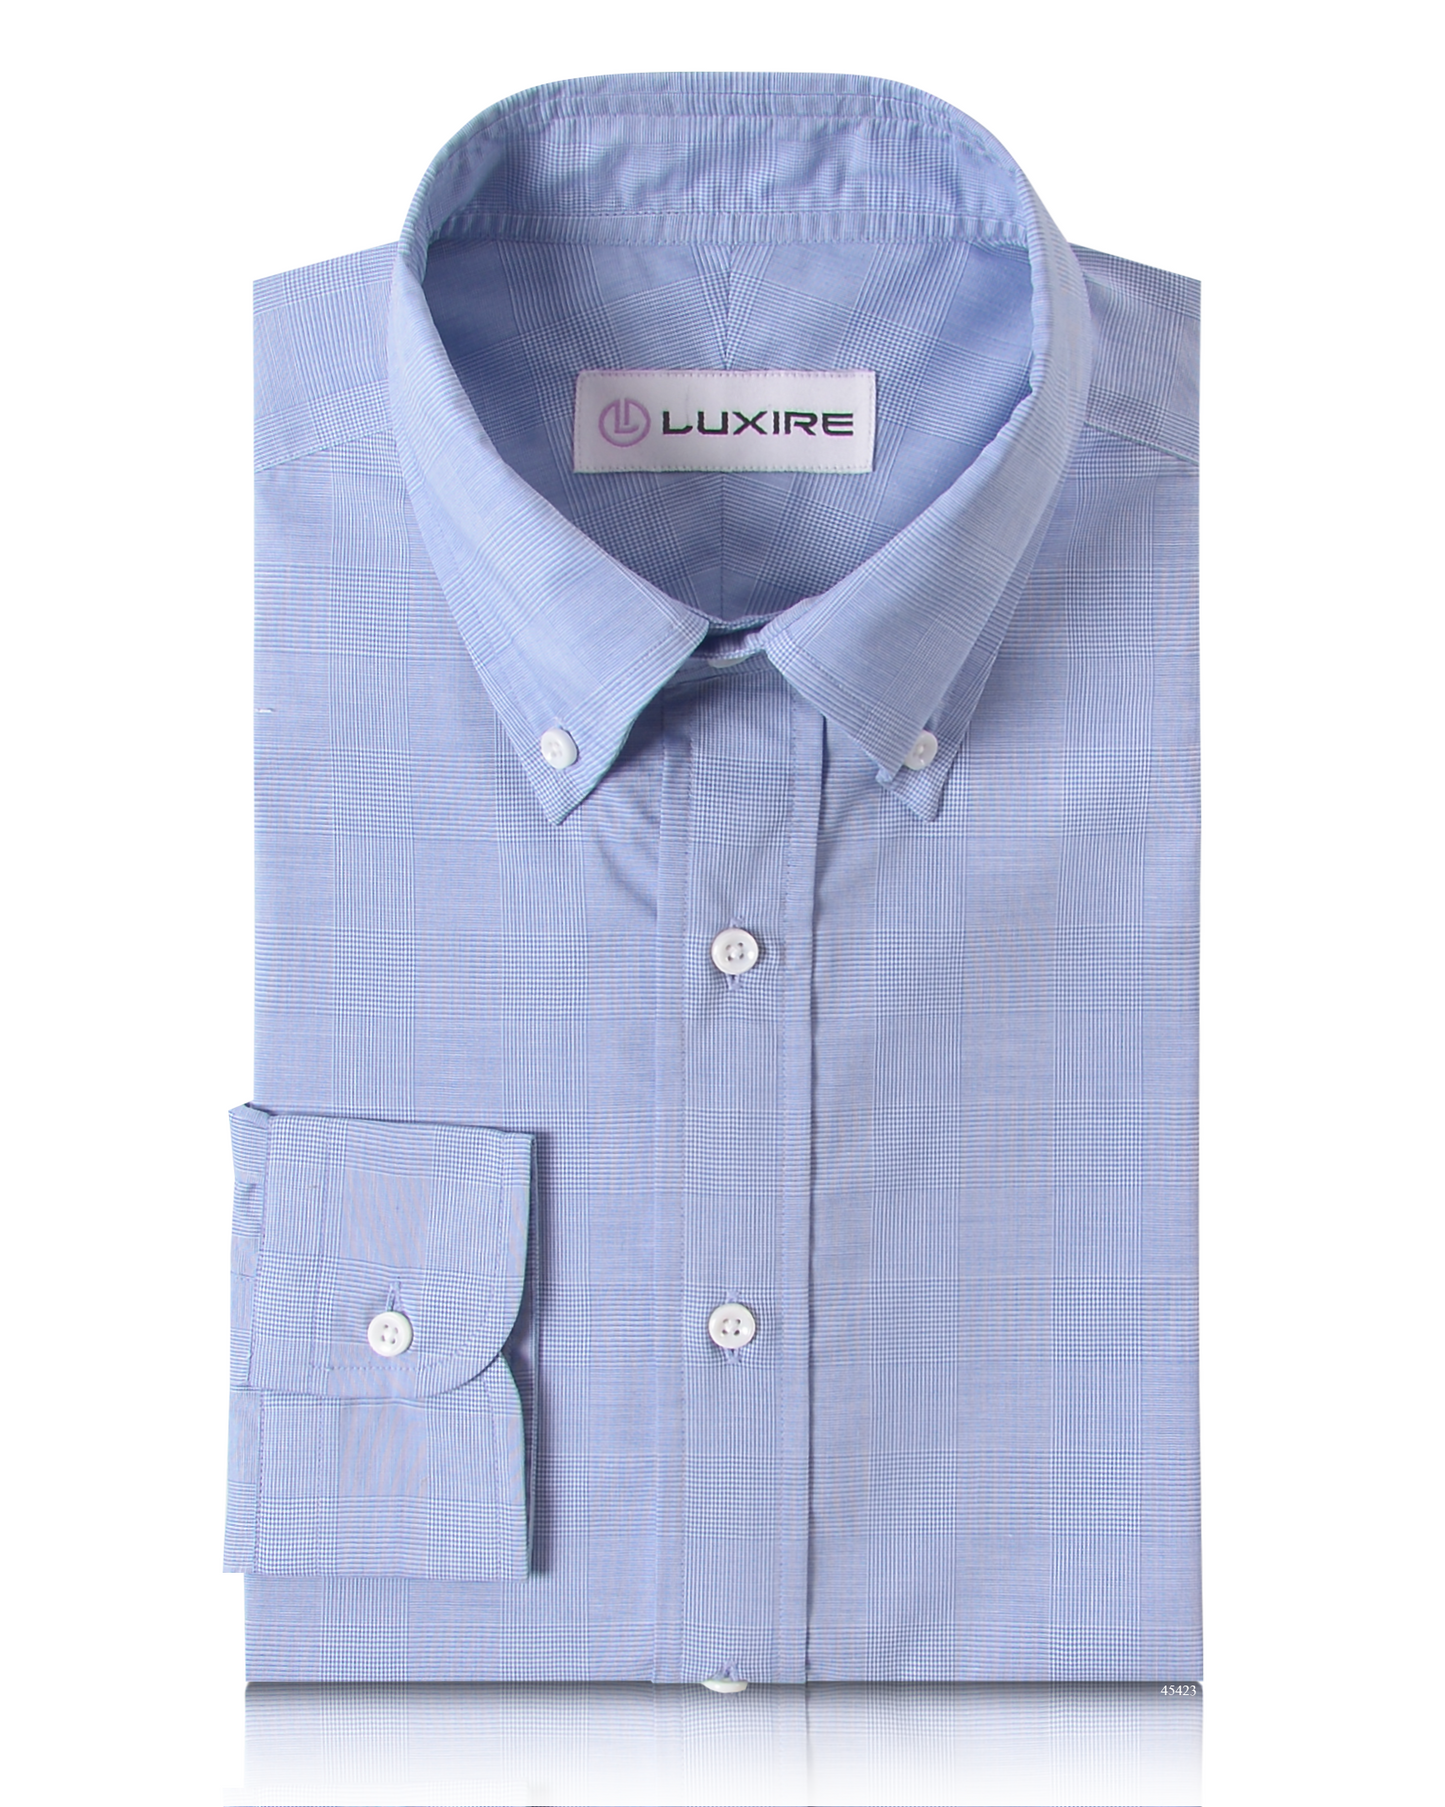 Glen Plaid Blue on White Shirt